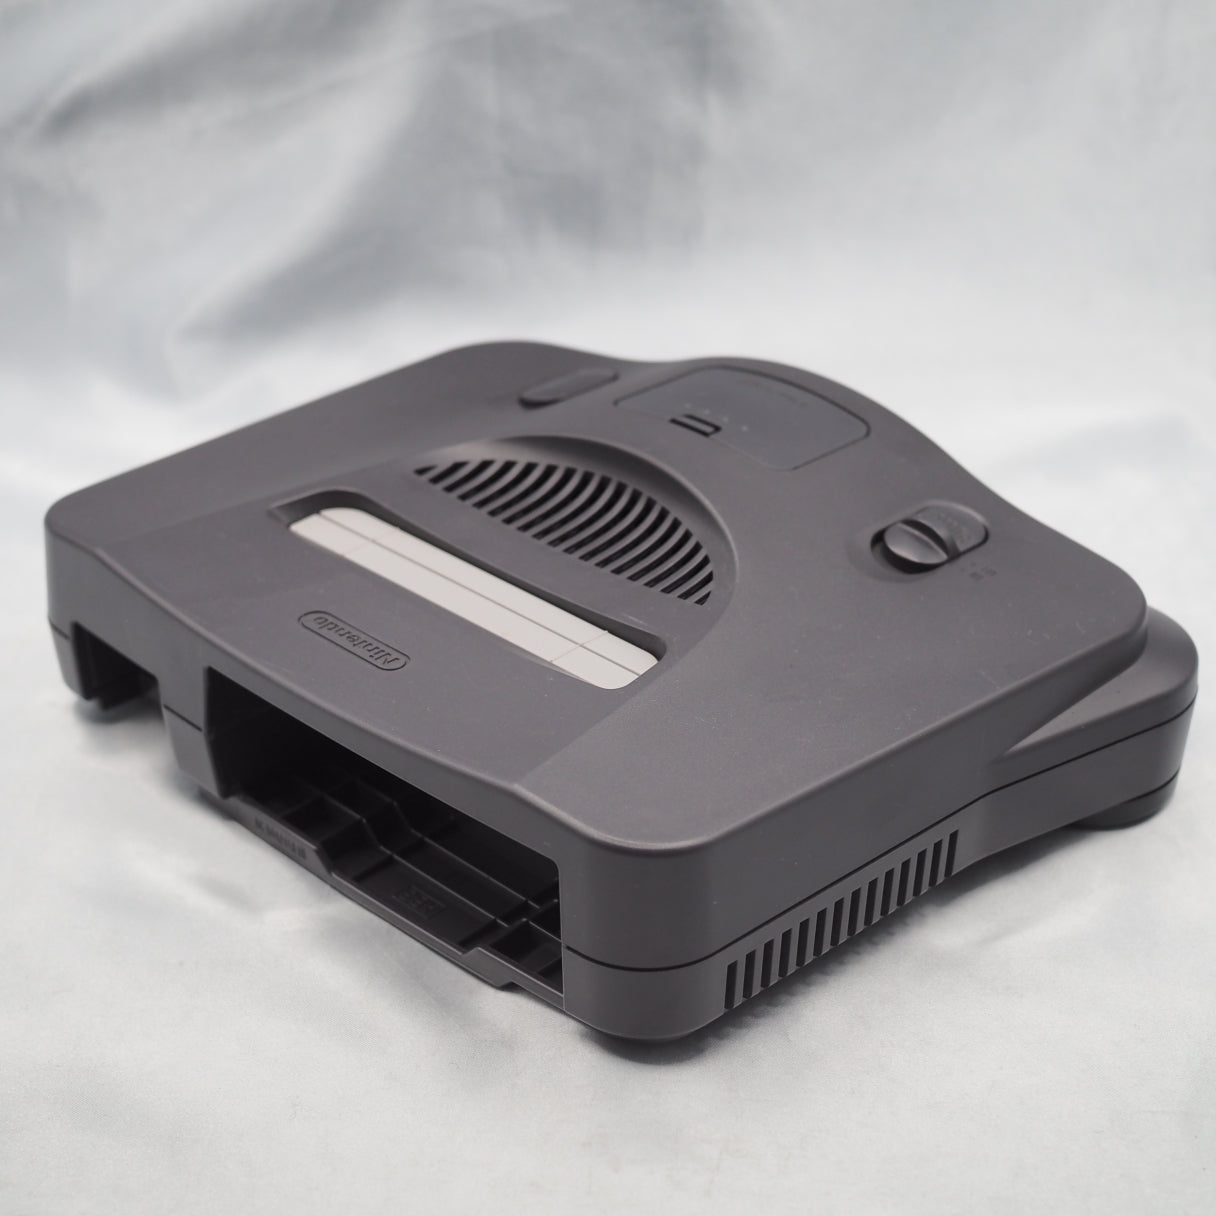 Nintendo 64 Console System Black NUS-001 Boxed [Region Free]